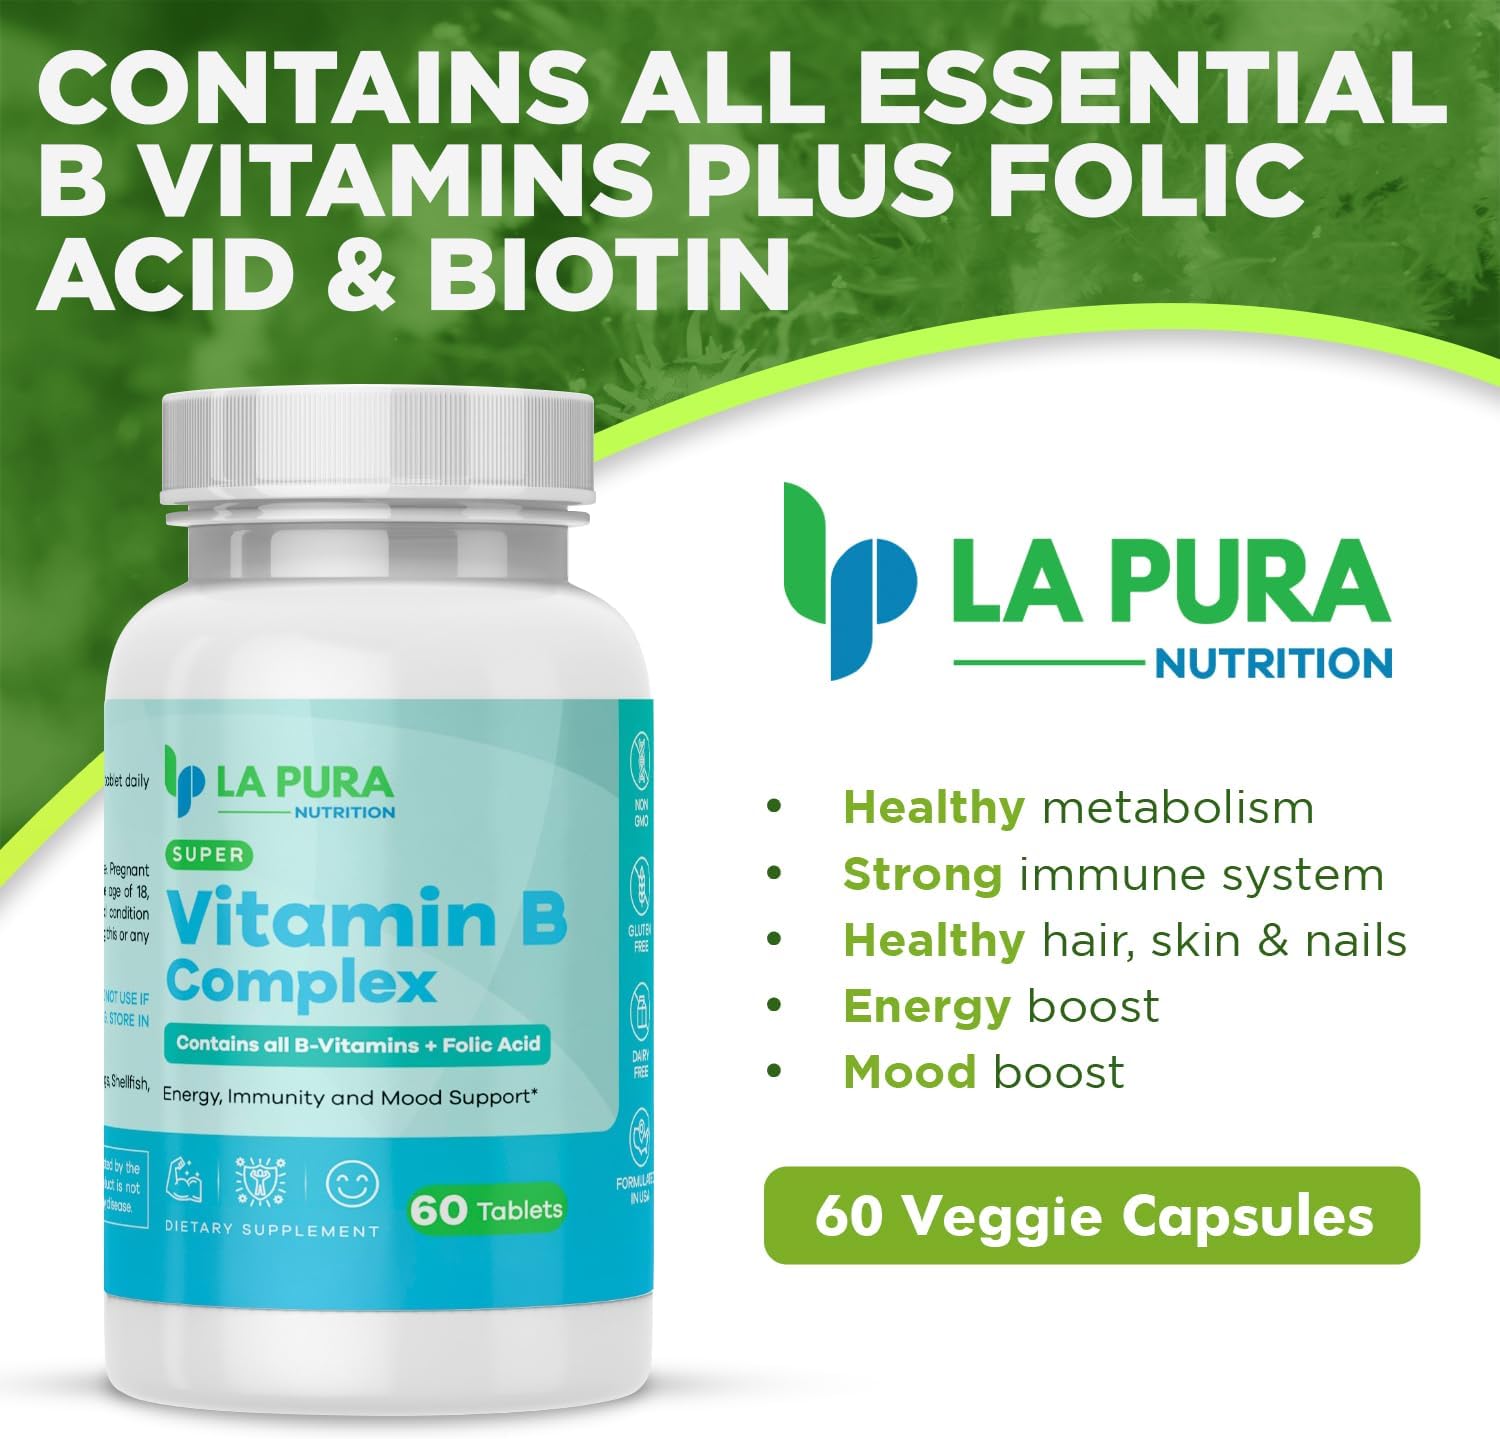 Super Vitamin B Complex with Folic Acid  Biotin, 60 Capsules – All B Vitamins Including B1, B2, B3, B5, B6, B12 for Energy, Immune  Mood Support– Non-GMO, Made in USA